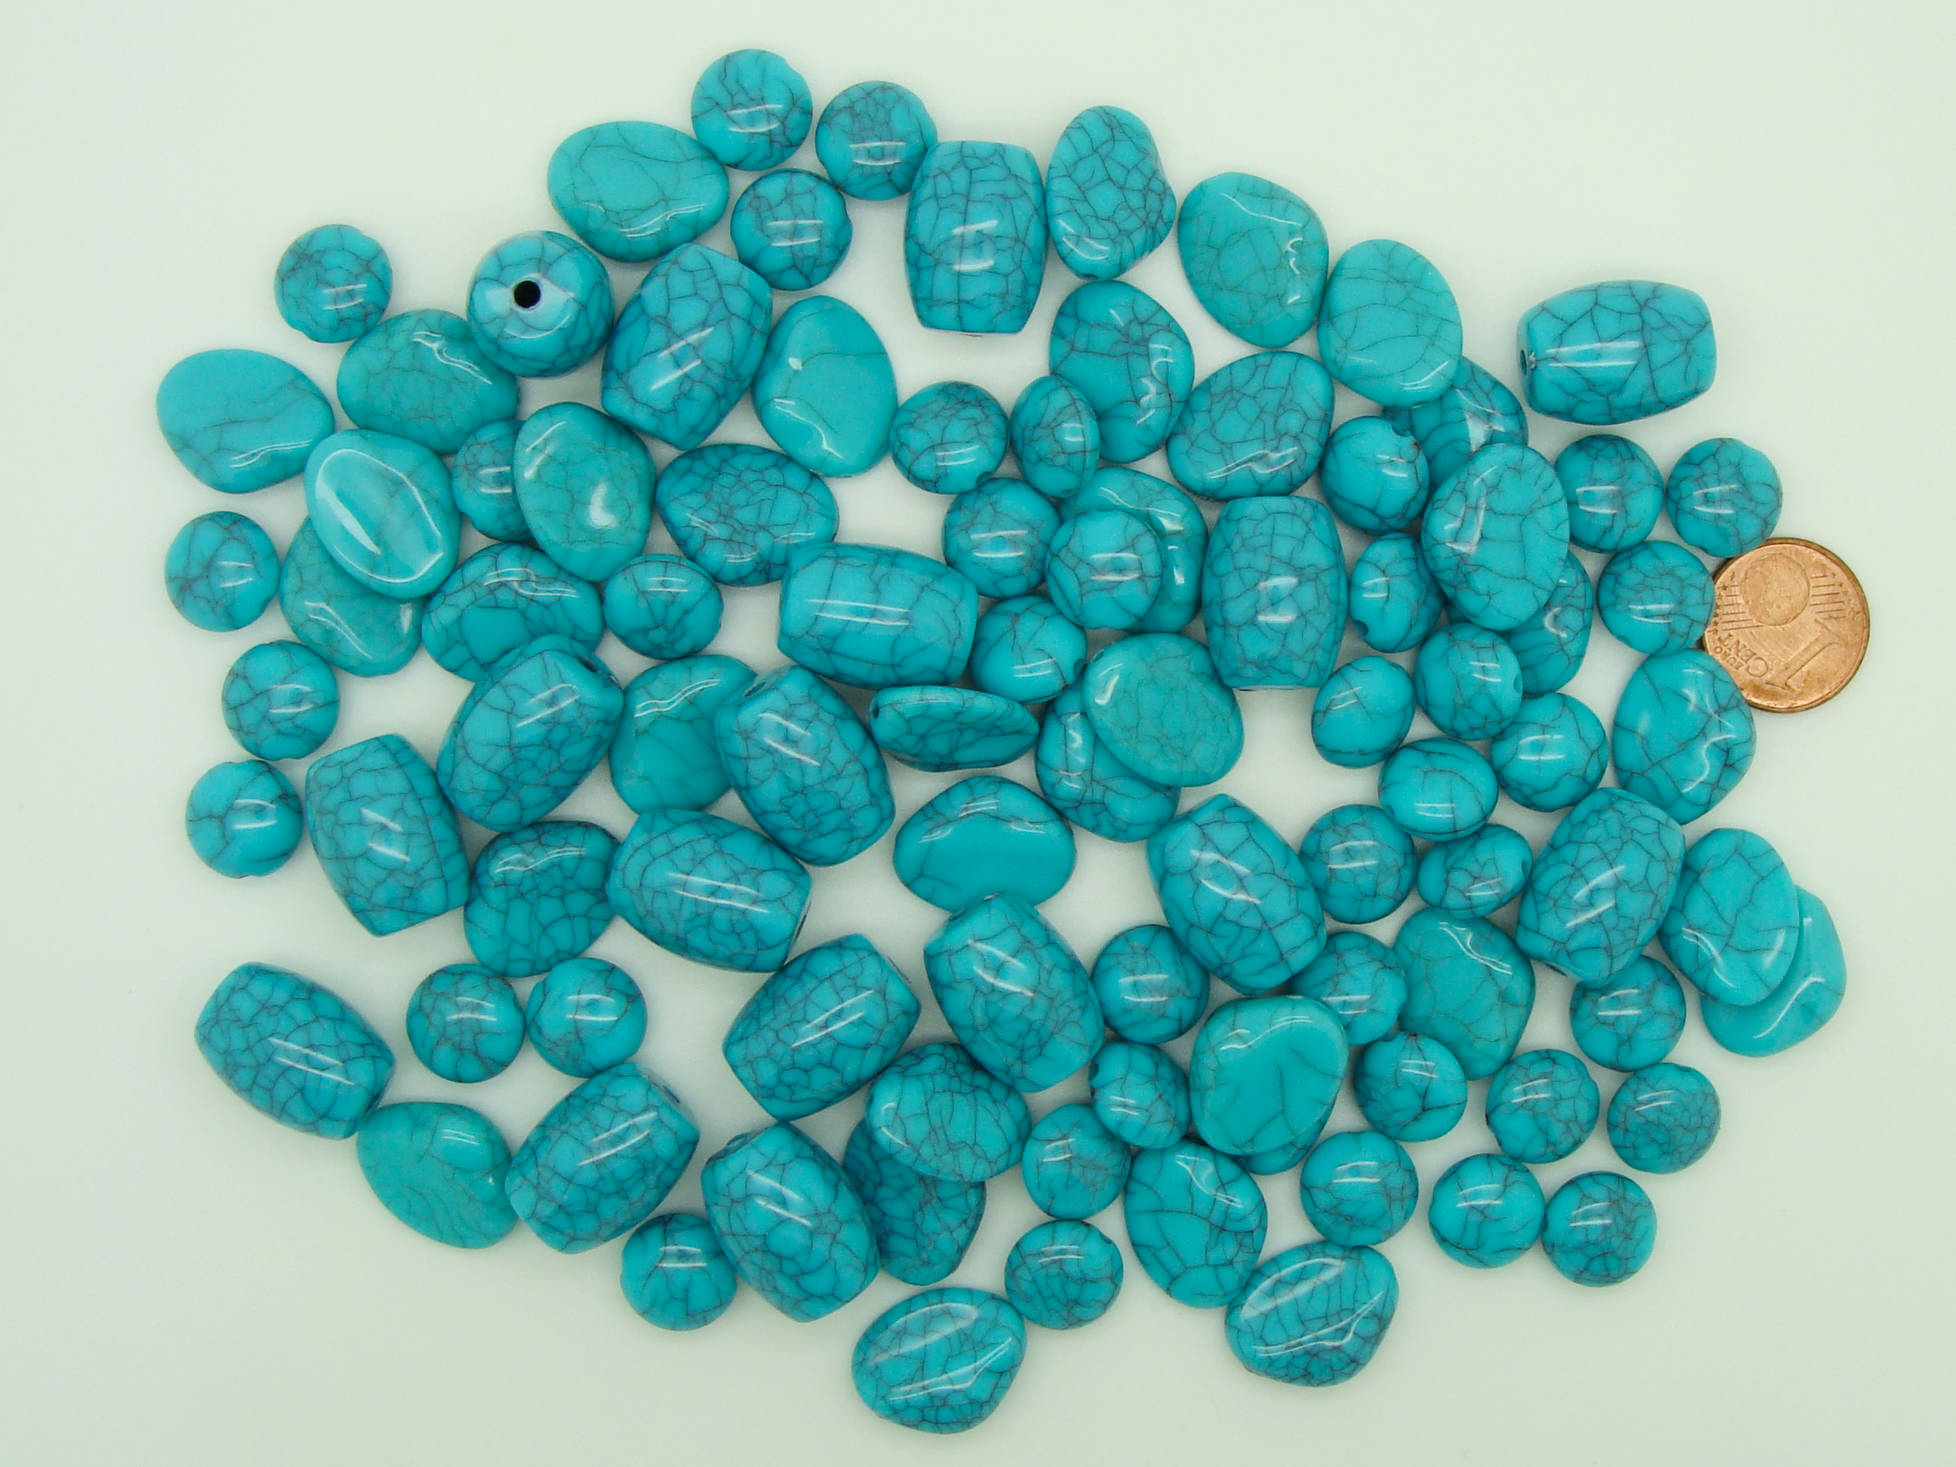 acry-75g-turquoise perle acrylique aspect turquoise bleue